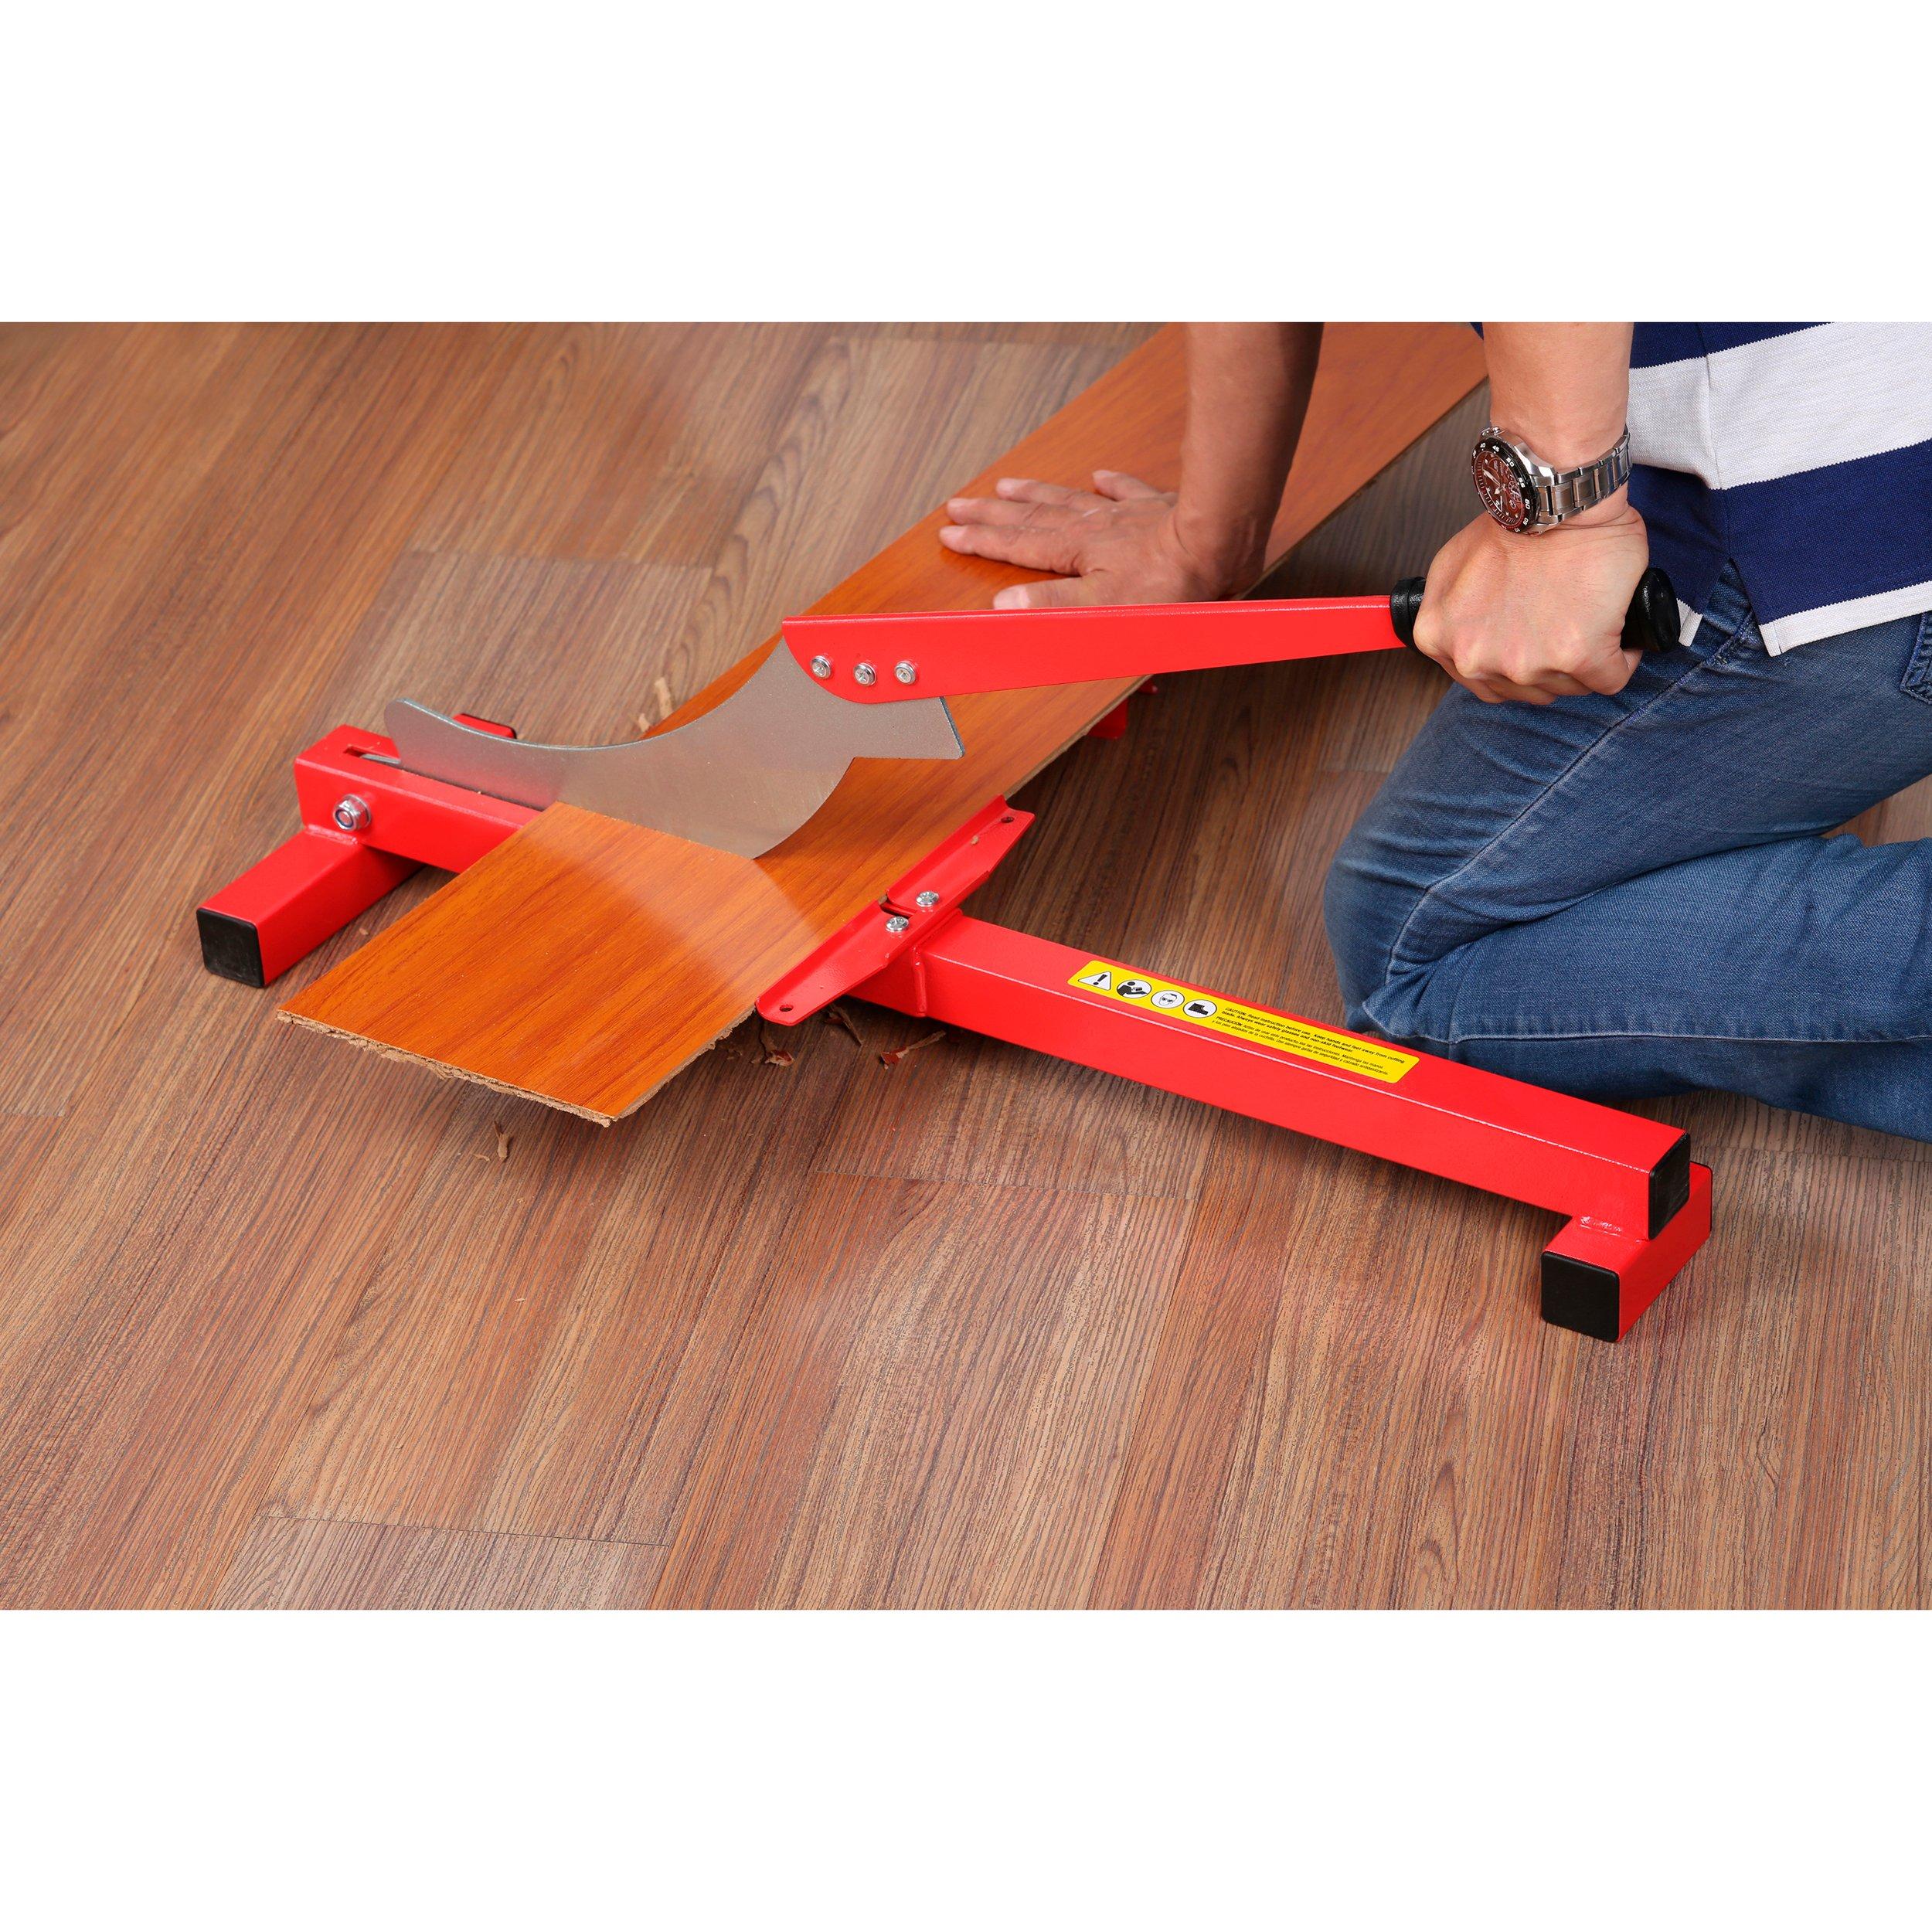 tonchean 12 inch Laminate Floor Cutter - Vinyl Wood Planks Cut